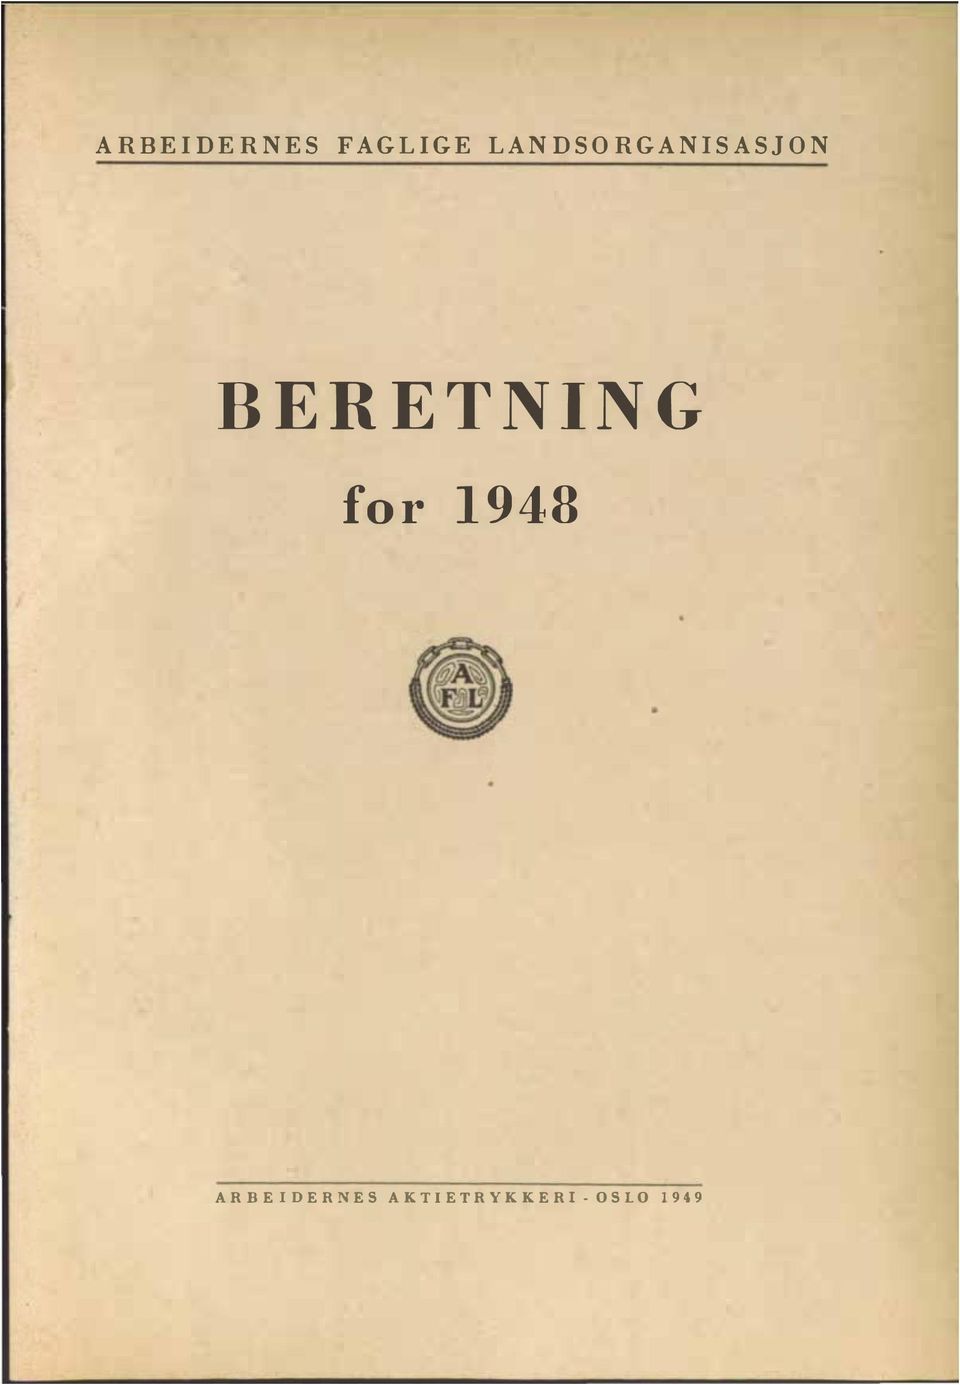 BERETNING for 1948